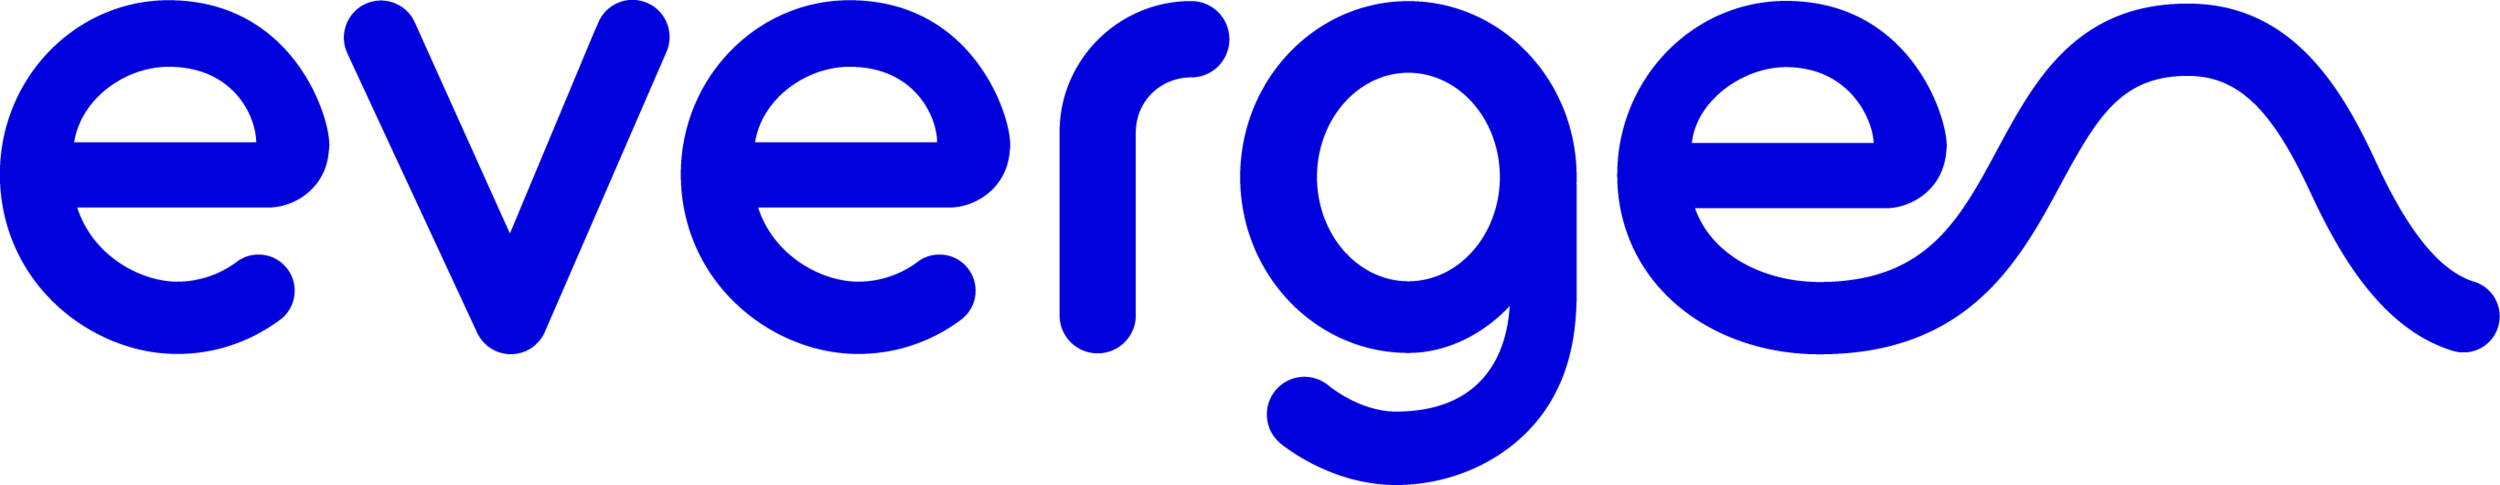 Evergen_Logo_Blue_RGB.png